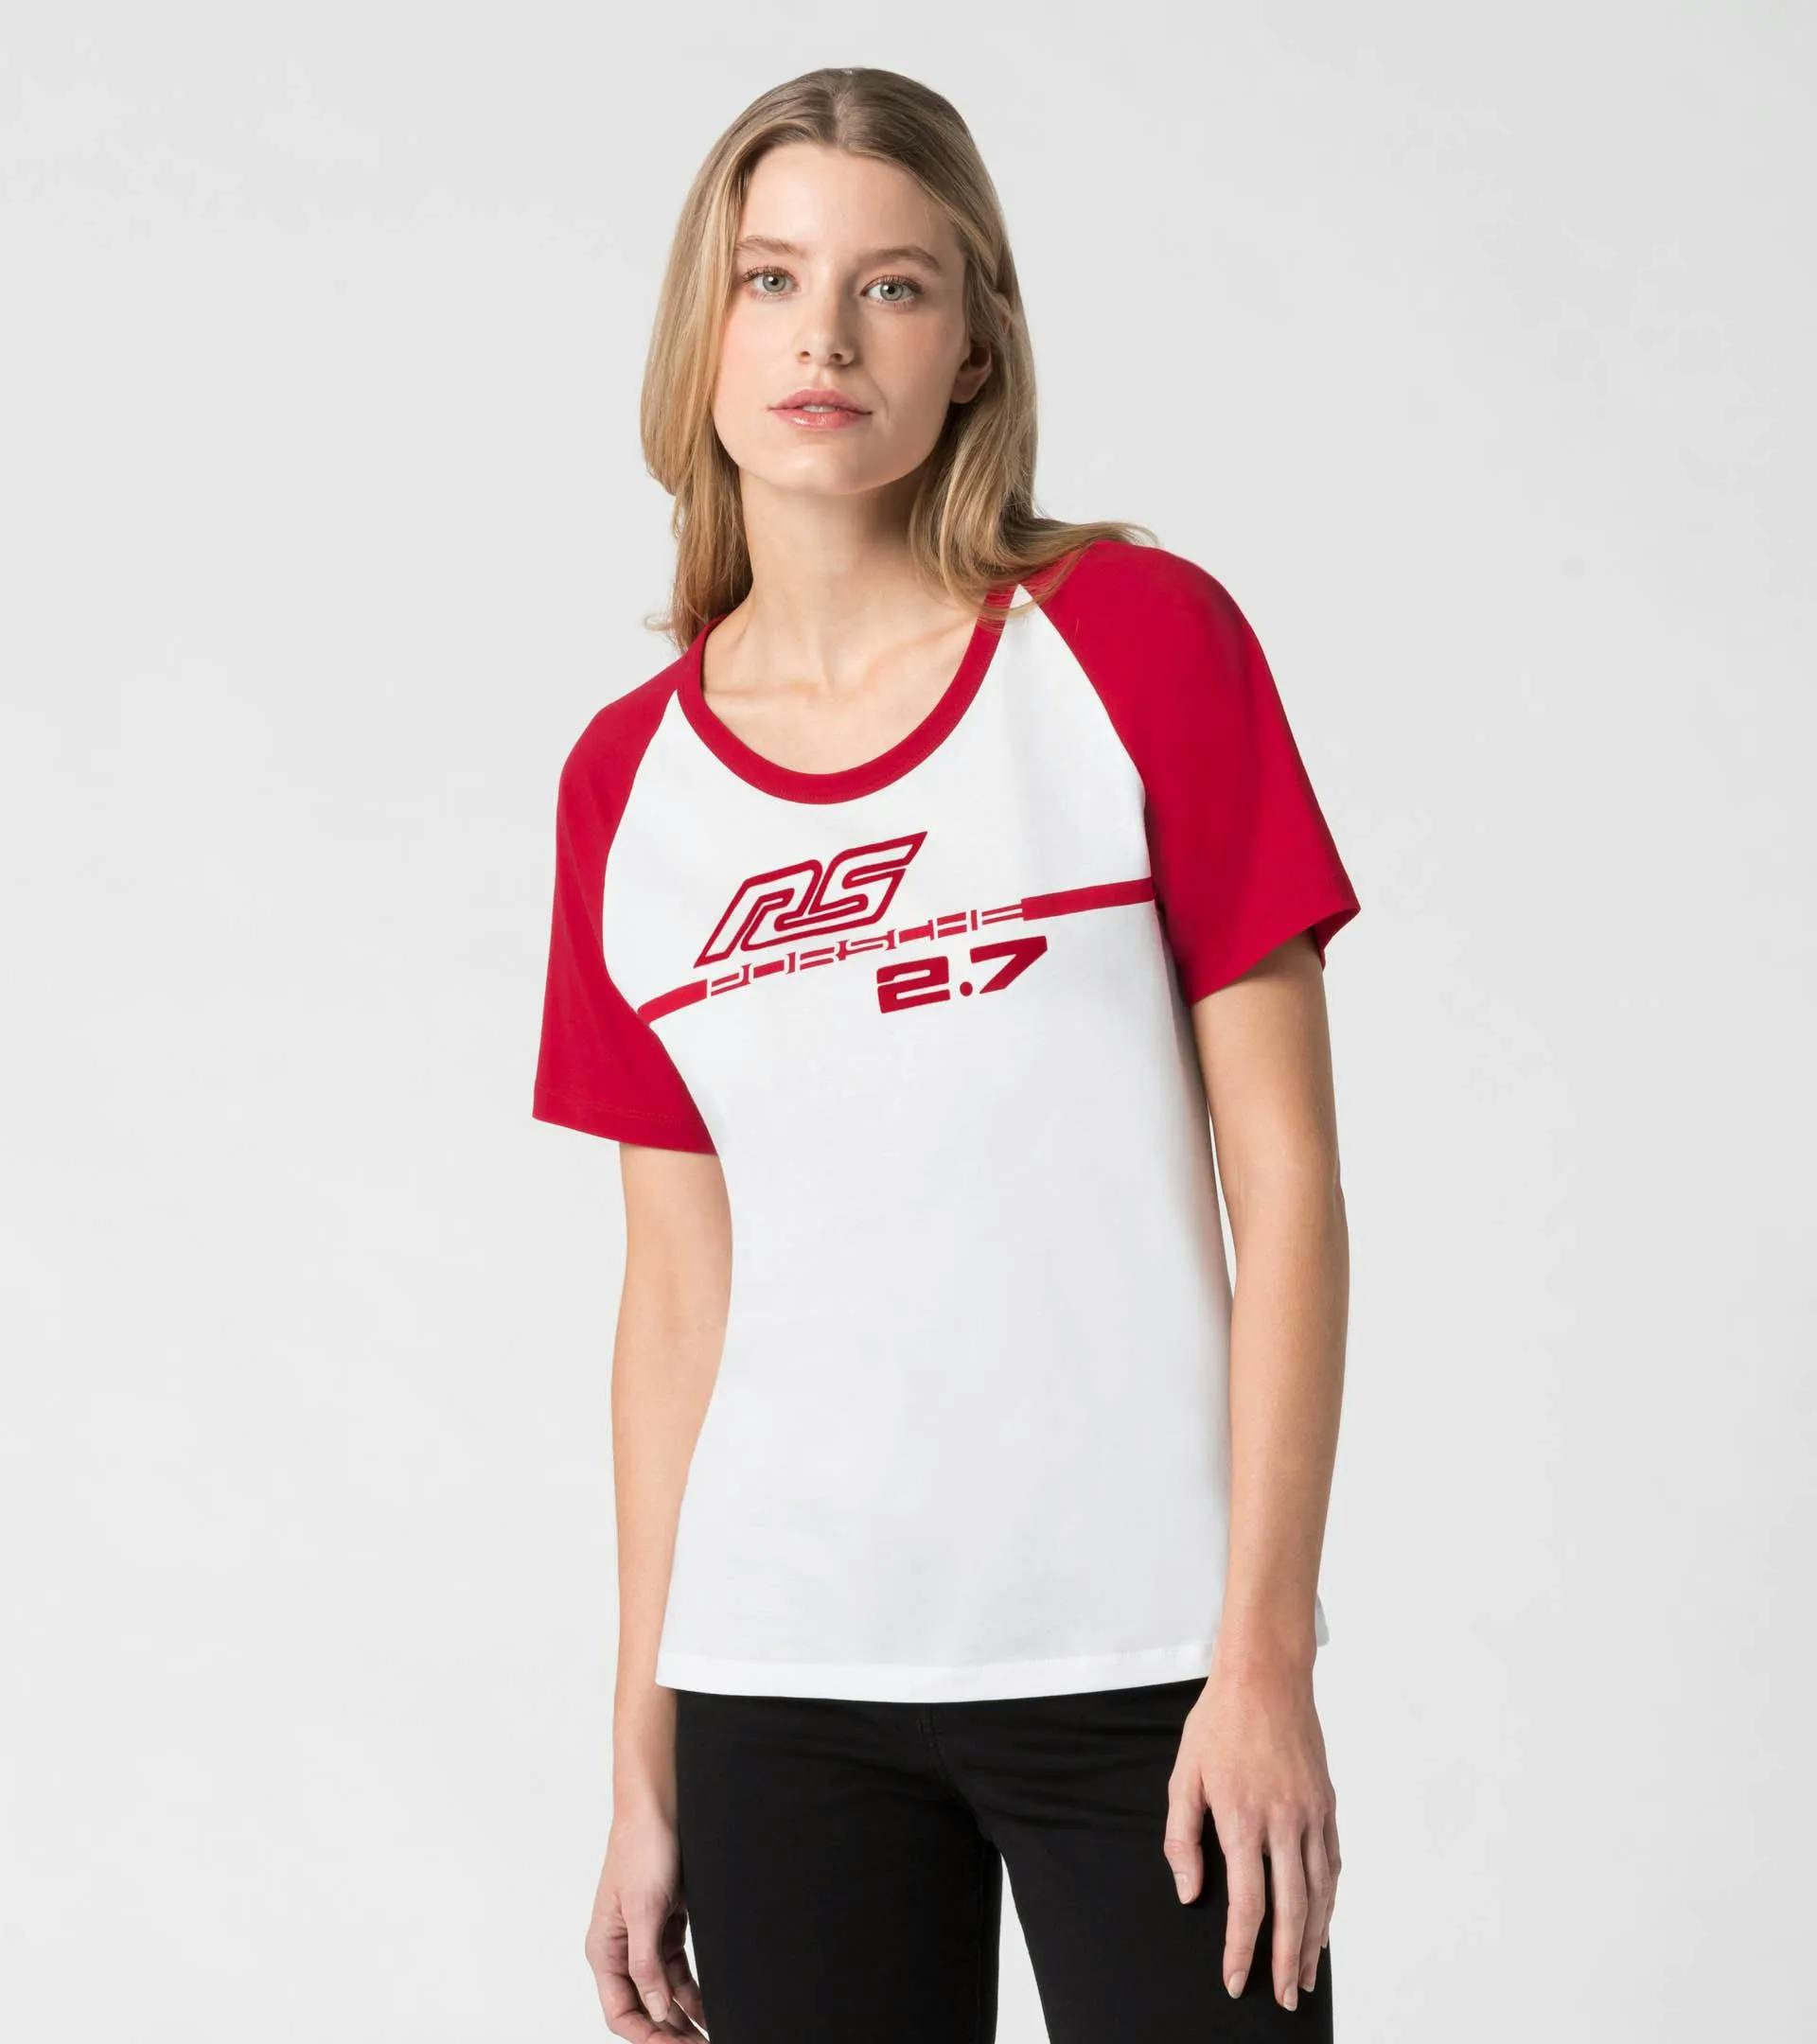 Women's T-shirt – RS 2.7 5